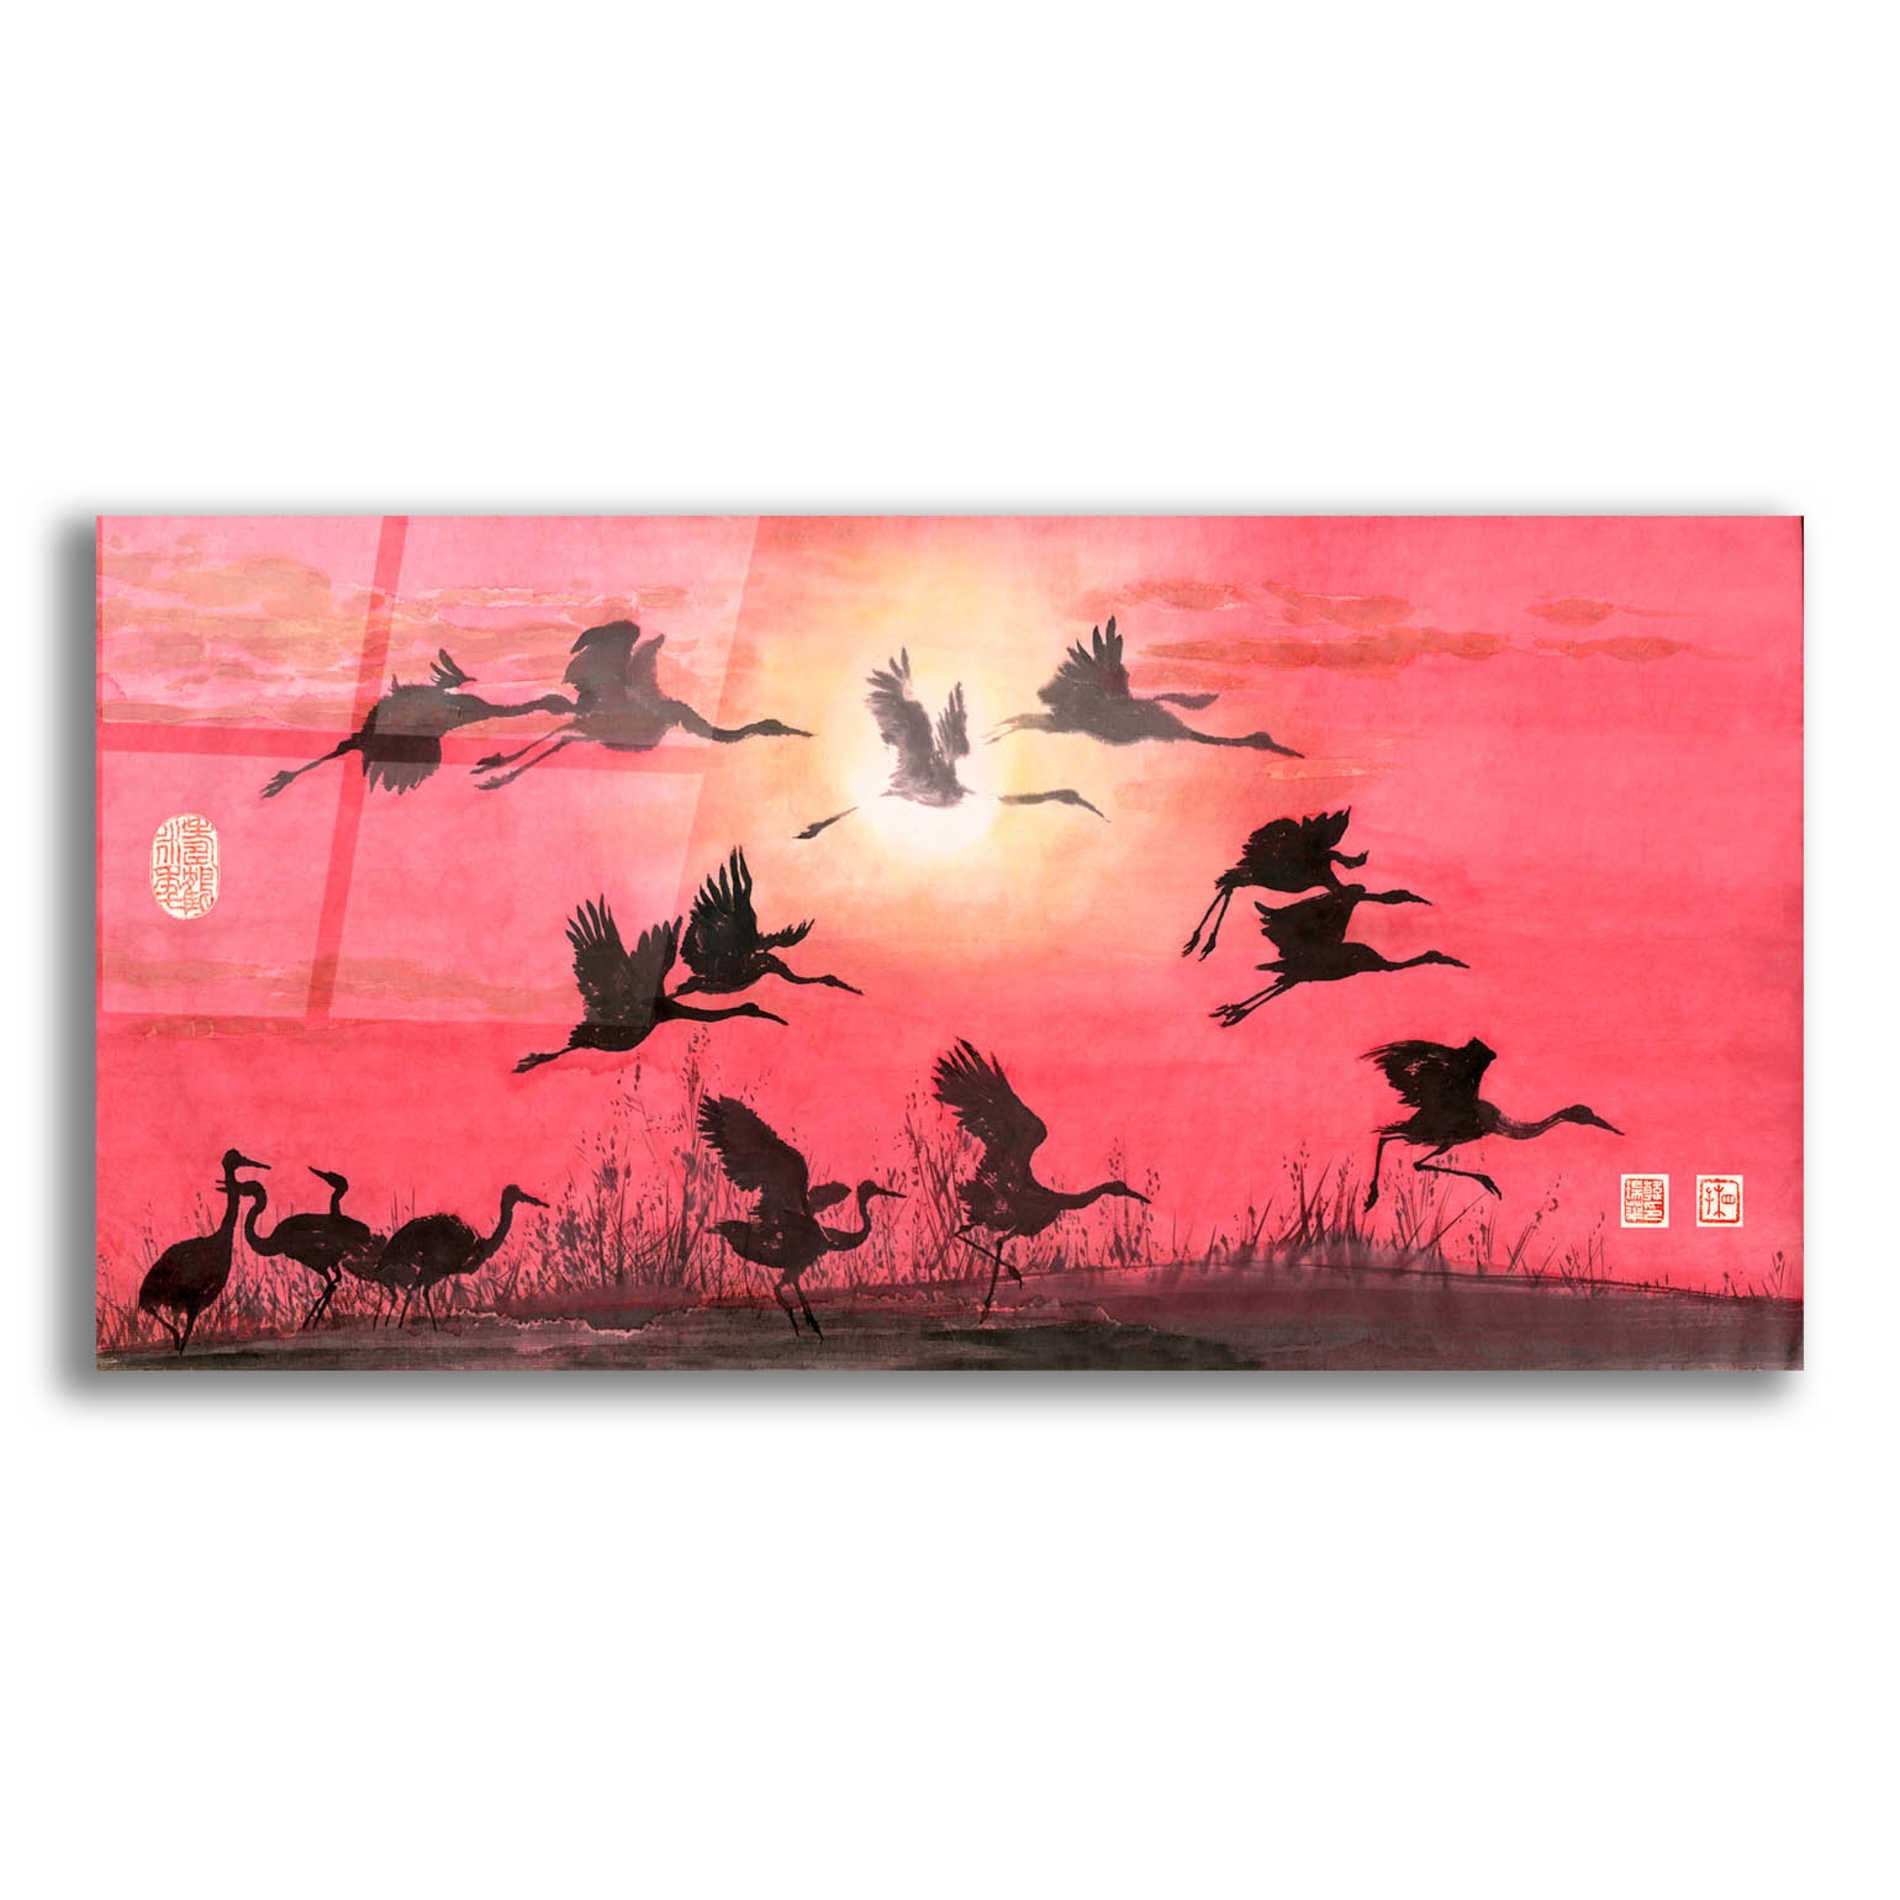 Epic Art 'Siege of Cranes' by River Han, Acrylic Glass Wall Art,24x12